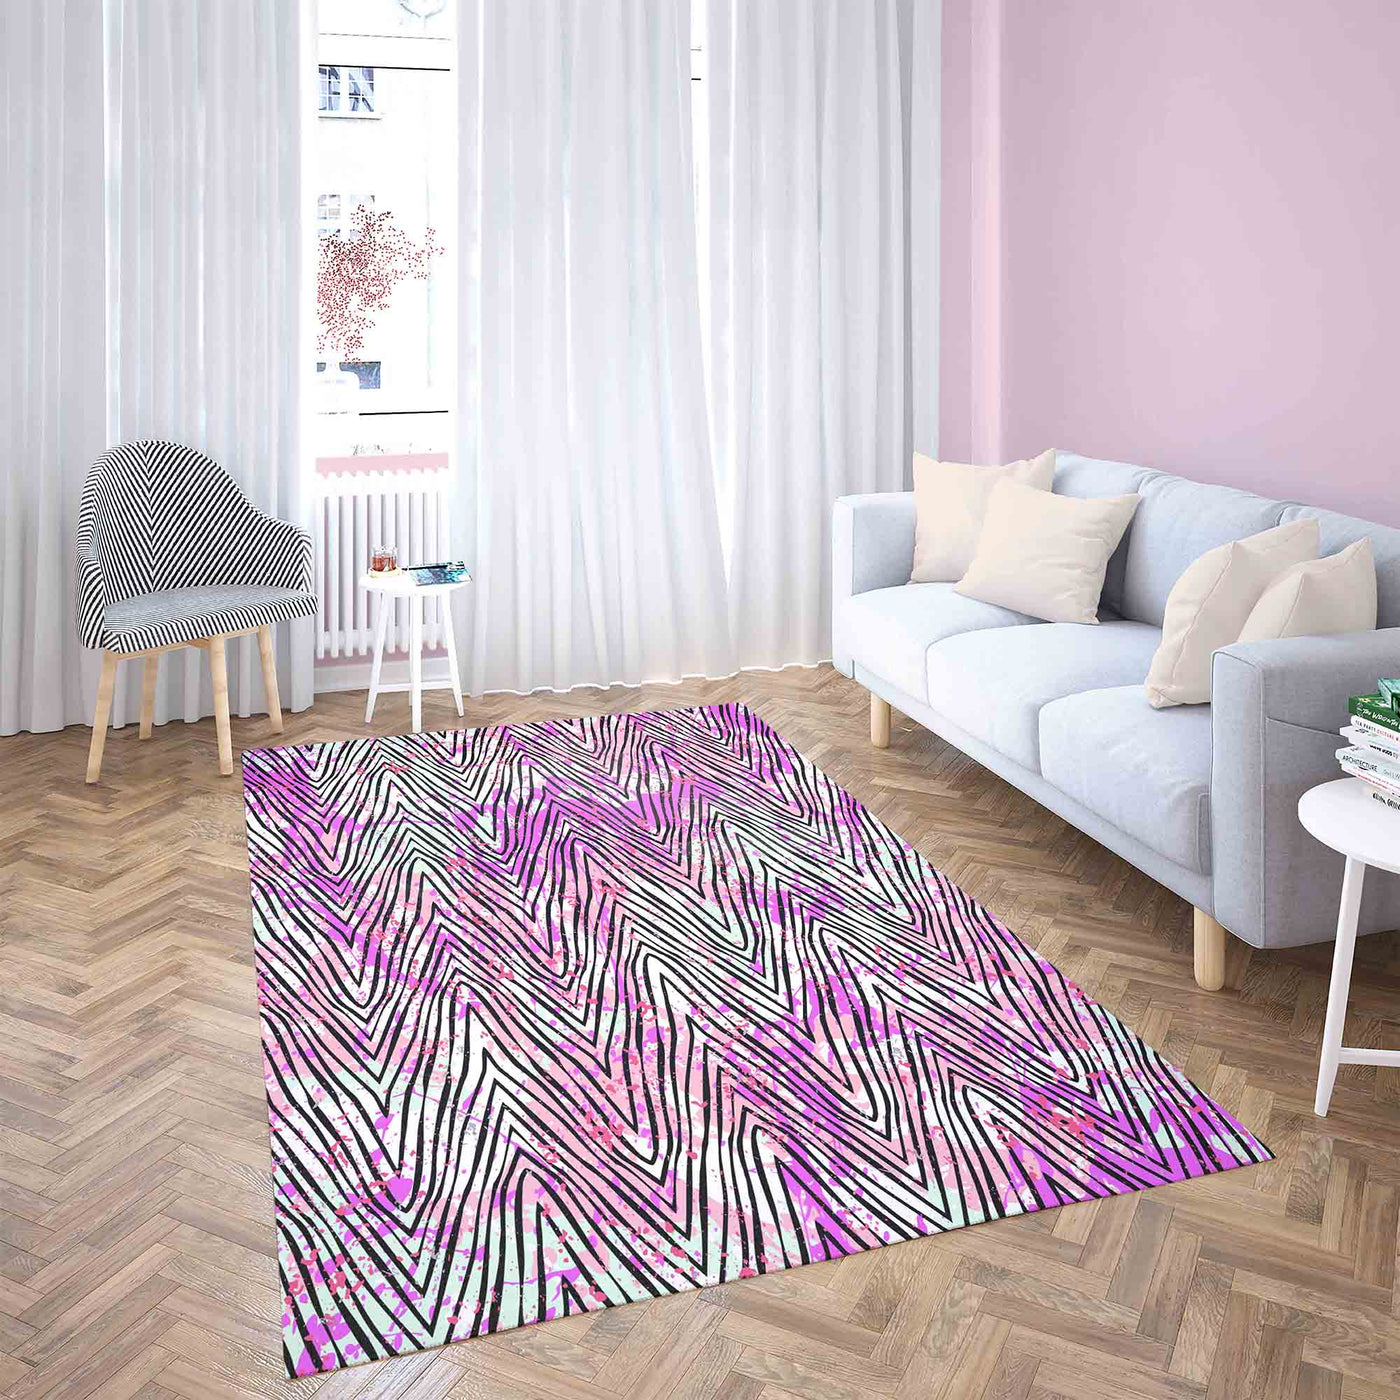 Neon Purple And Zebra Carpet